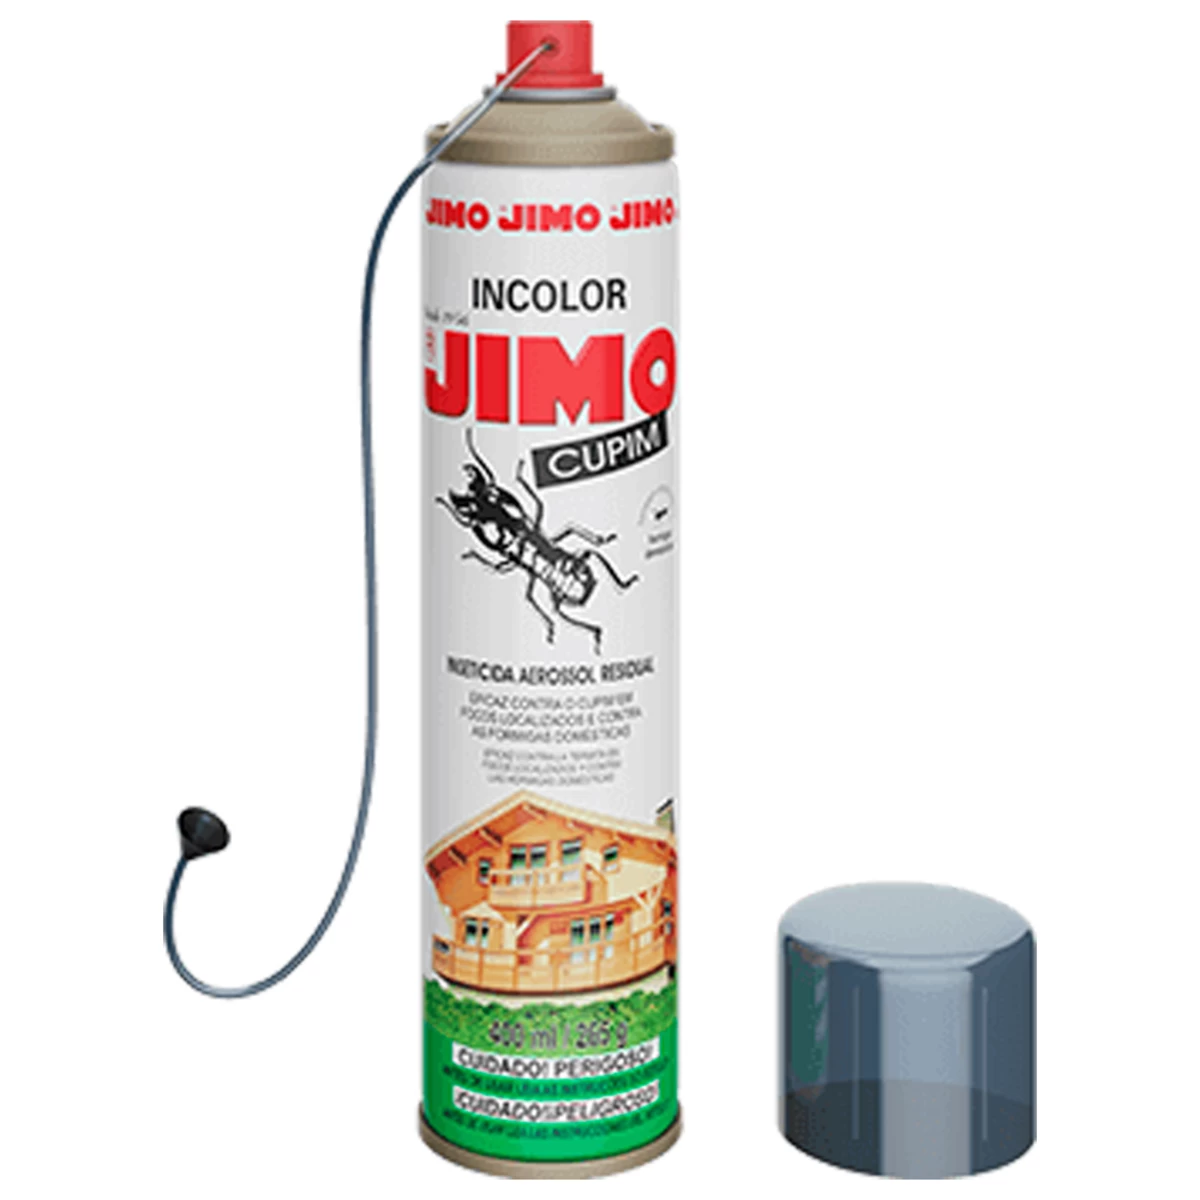 jimo-cupim-incolor-en-aerosol-400ml